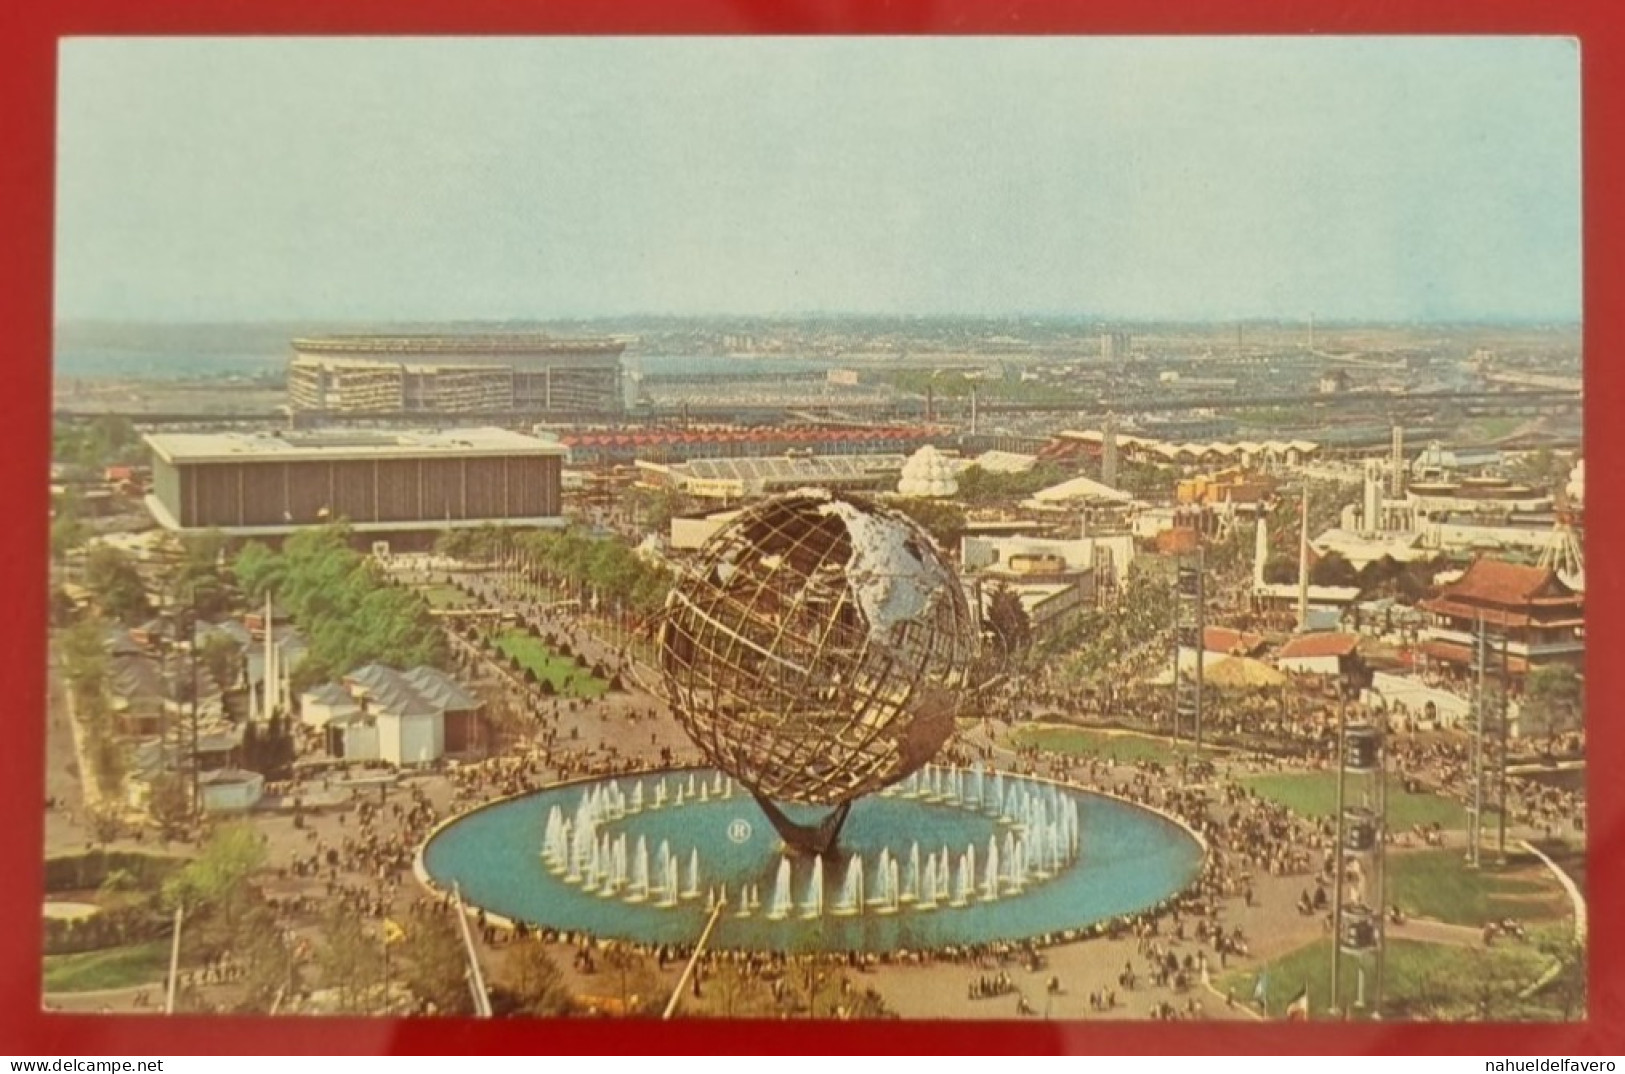 Uncirculated Postcard - USA - NY, NEW YORK WORLD'S FAIR 1964-65 - UNISPHERE - Expositions